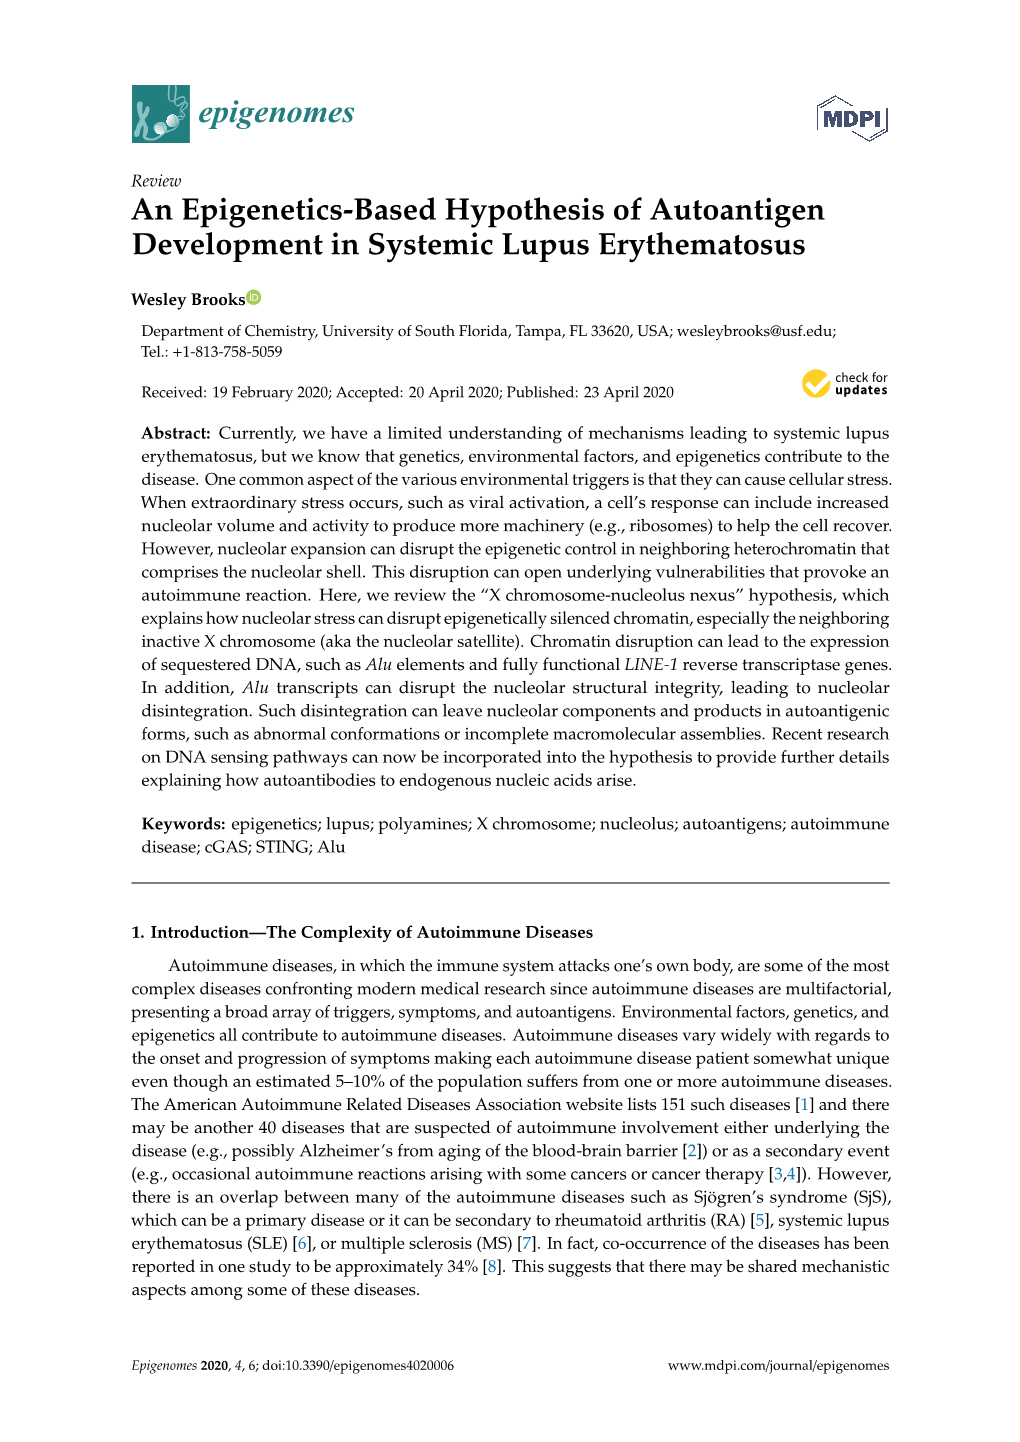 An Epigenetics-Based Hypothesis of Autoantigen Development in Systemic Lupus Erythematosus